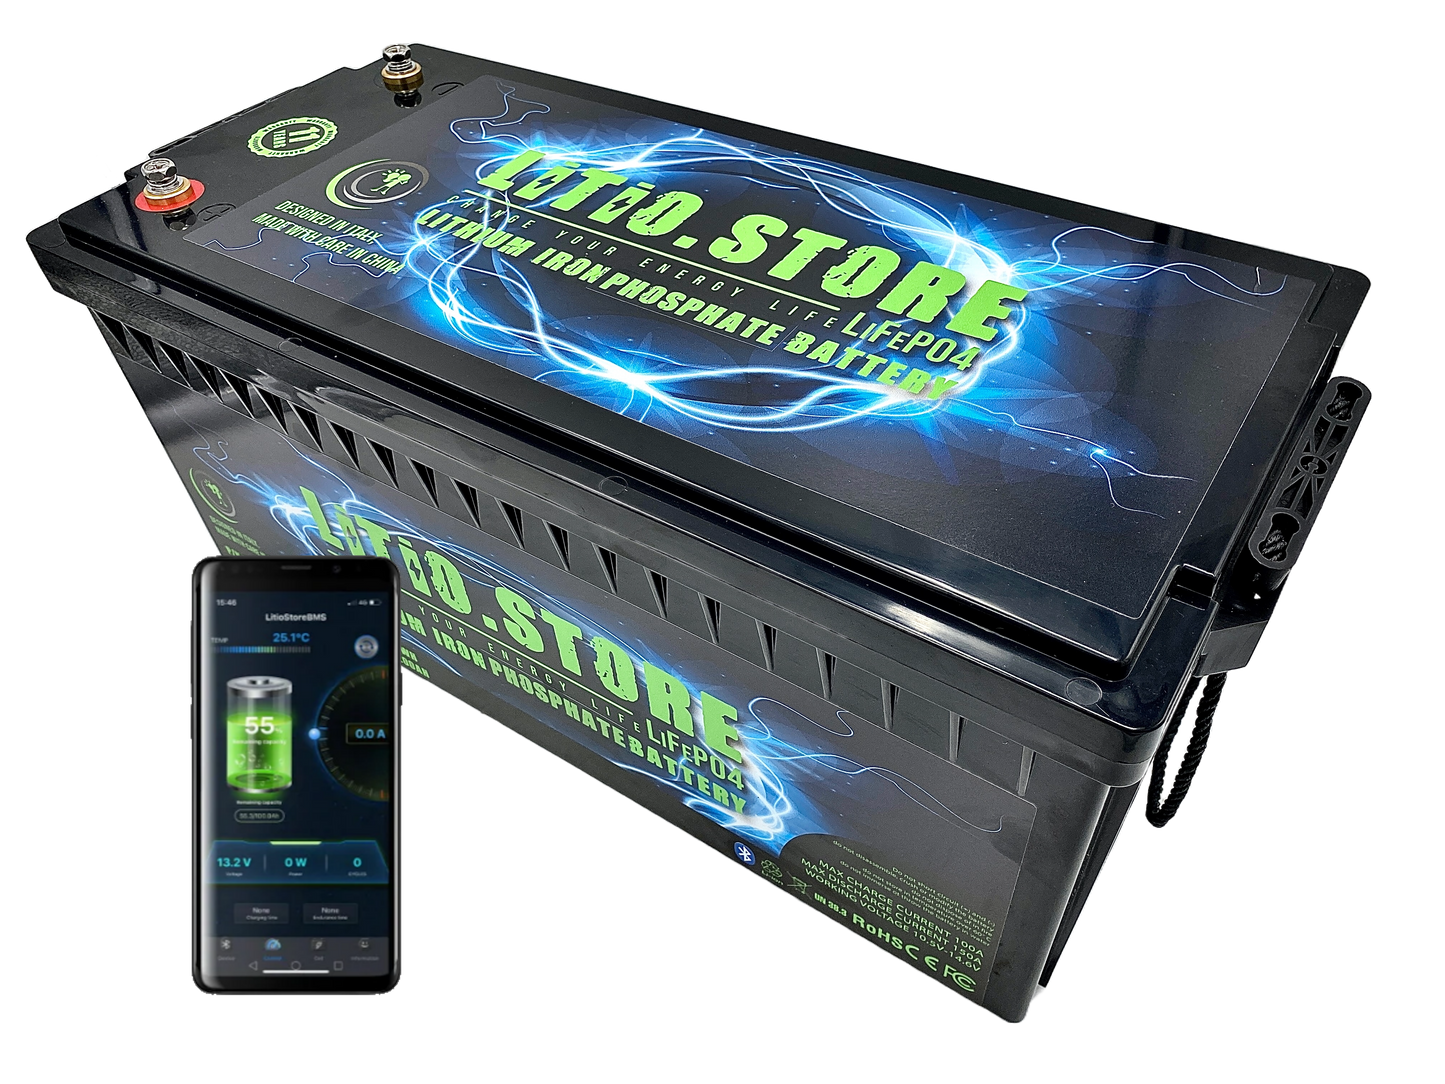 Baterie LiFePO4 12V 200Ah Bluetooth Litio Store LFP 150A BMS 2560Wh